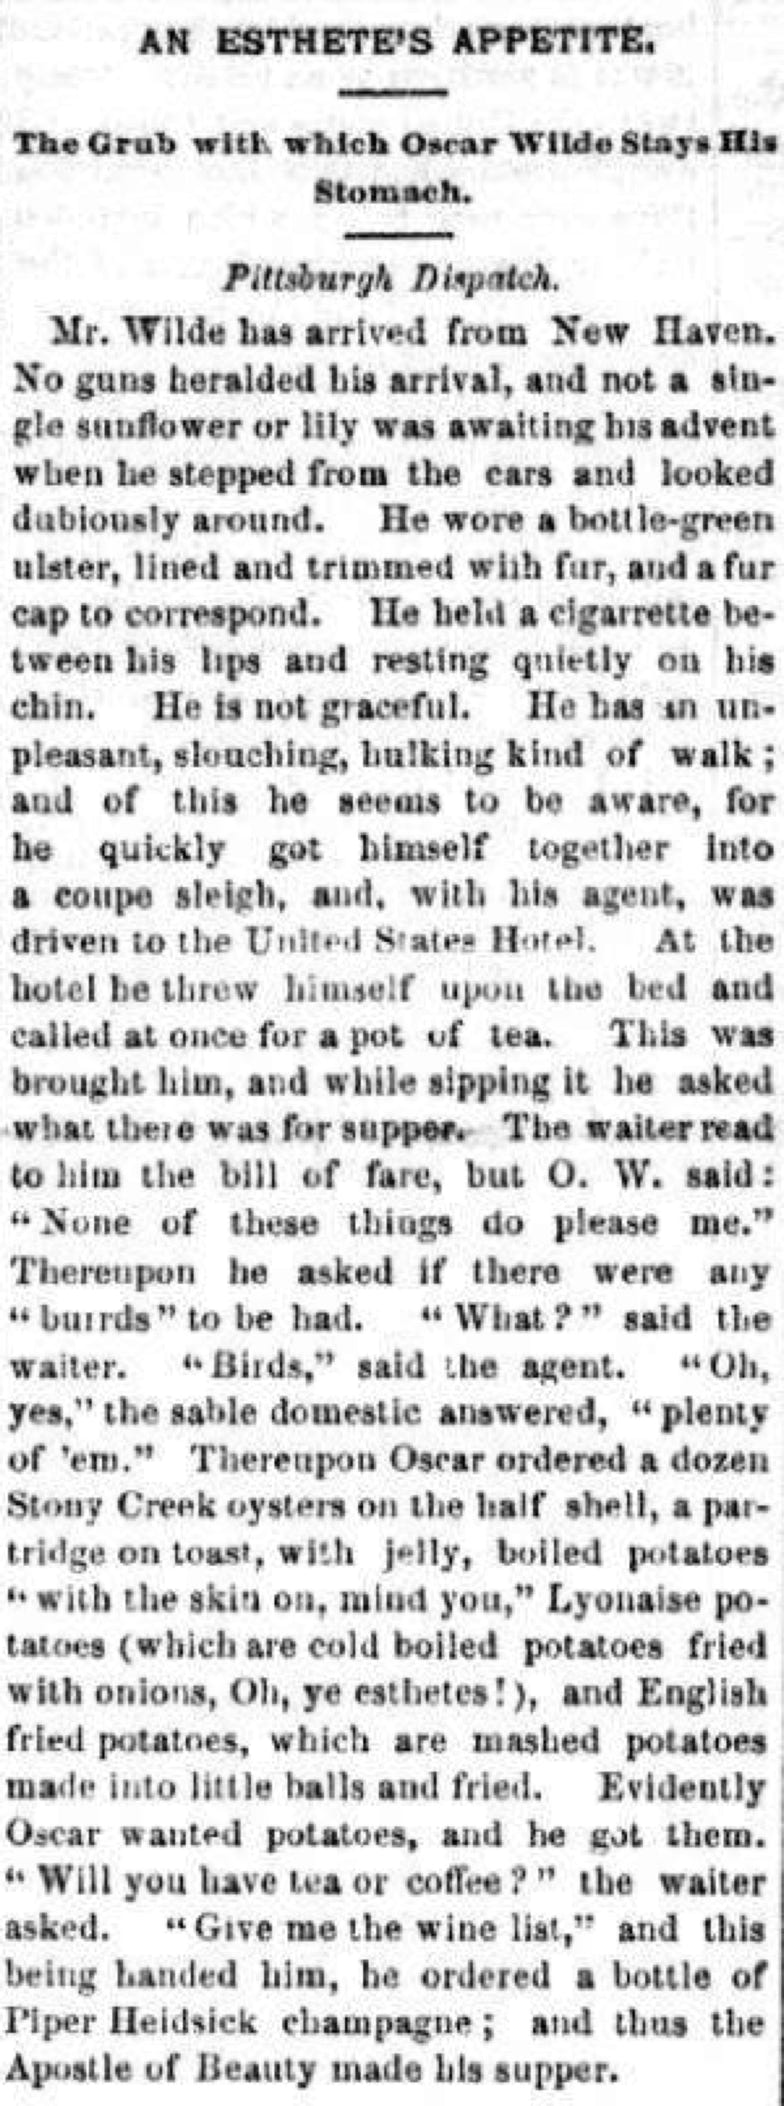 An Esthete's Appetite, The New North-West, Deerfield, MT, March 10, 1882. Oscar Wilde 